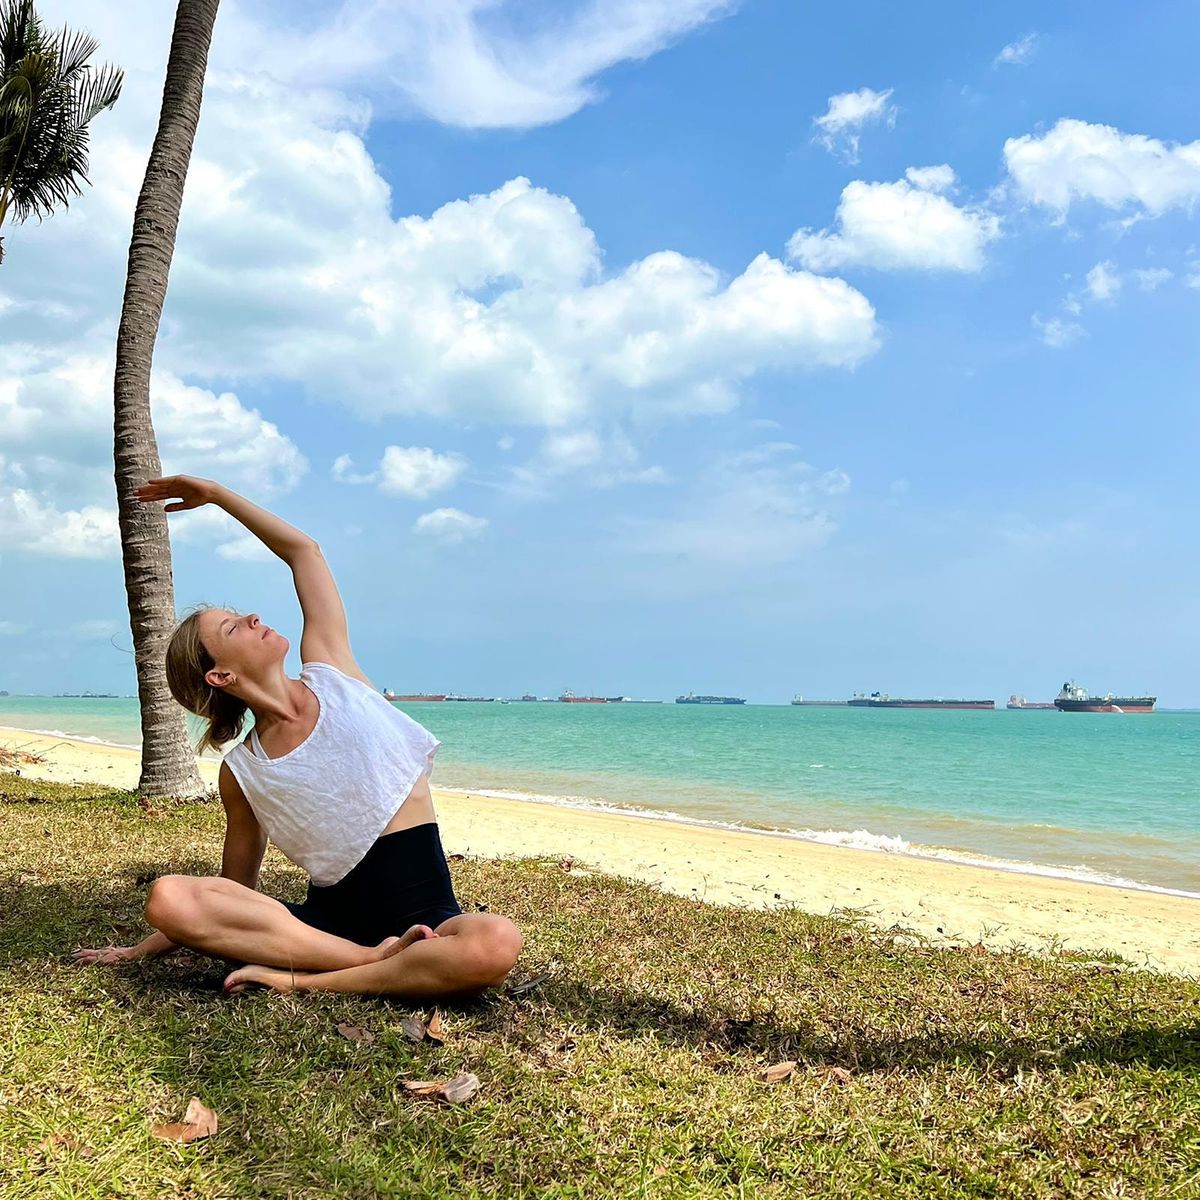 Yoga for a Change at East Coast Park (Coastal Playgrove)